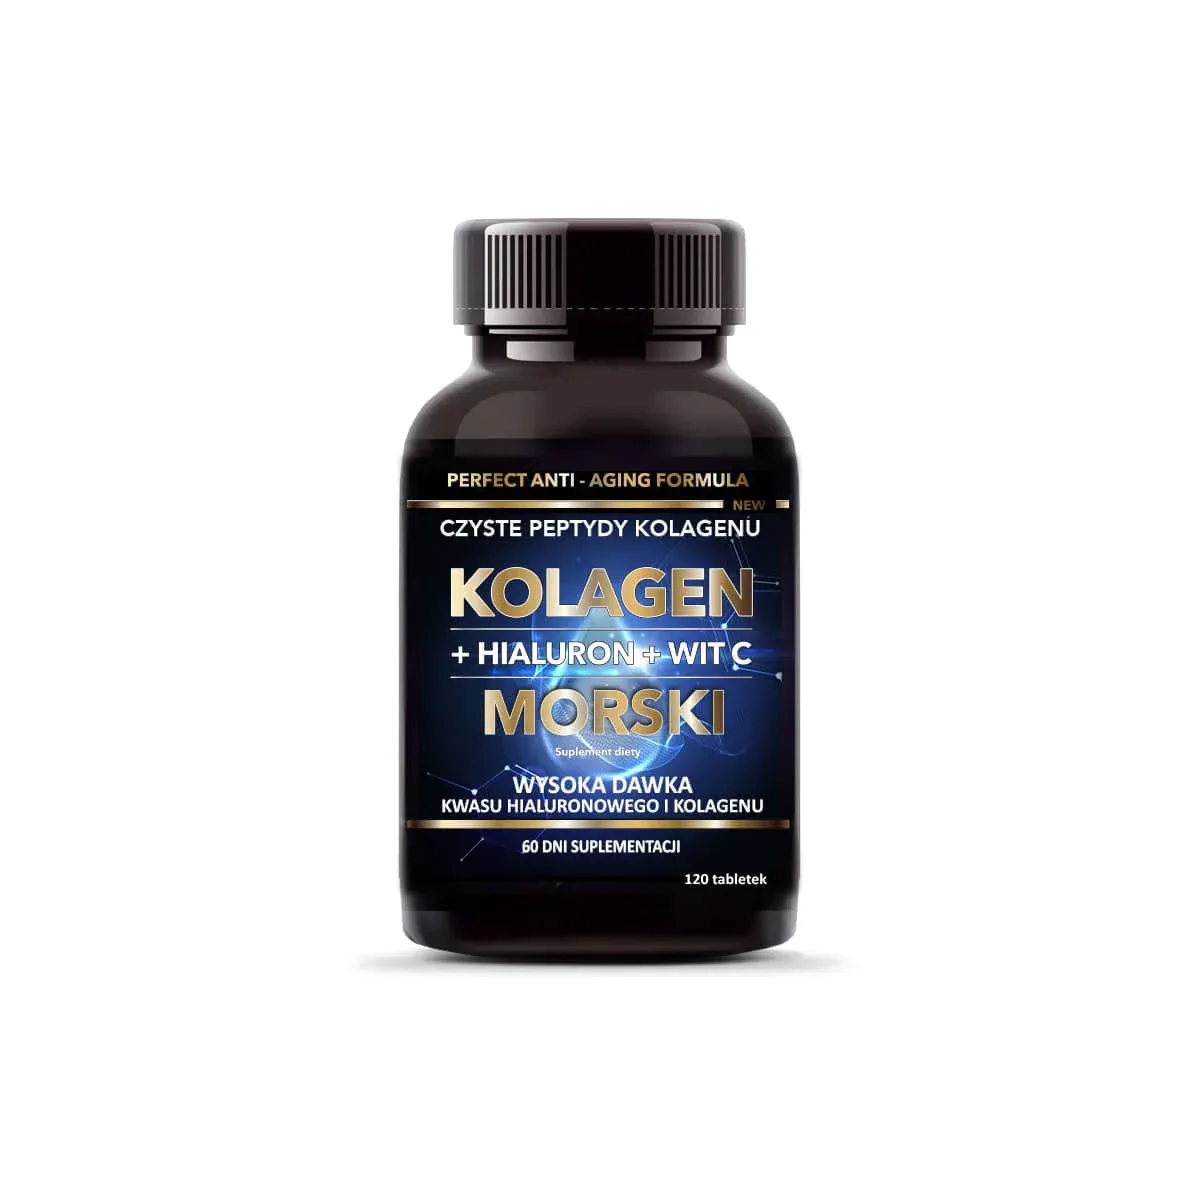 Intenson kolagen morski + hialuron + wit. C 500 mg, 120 tabletek